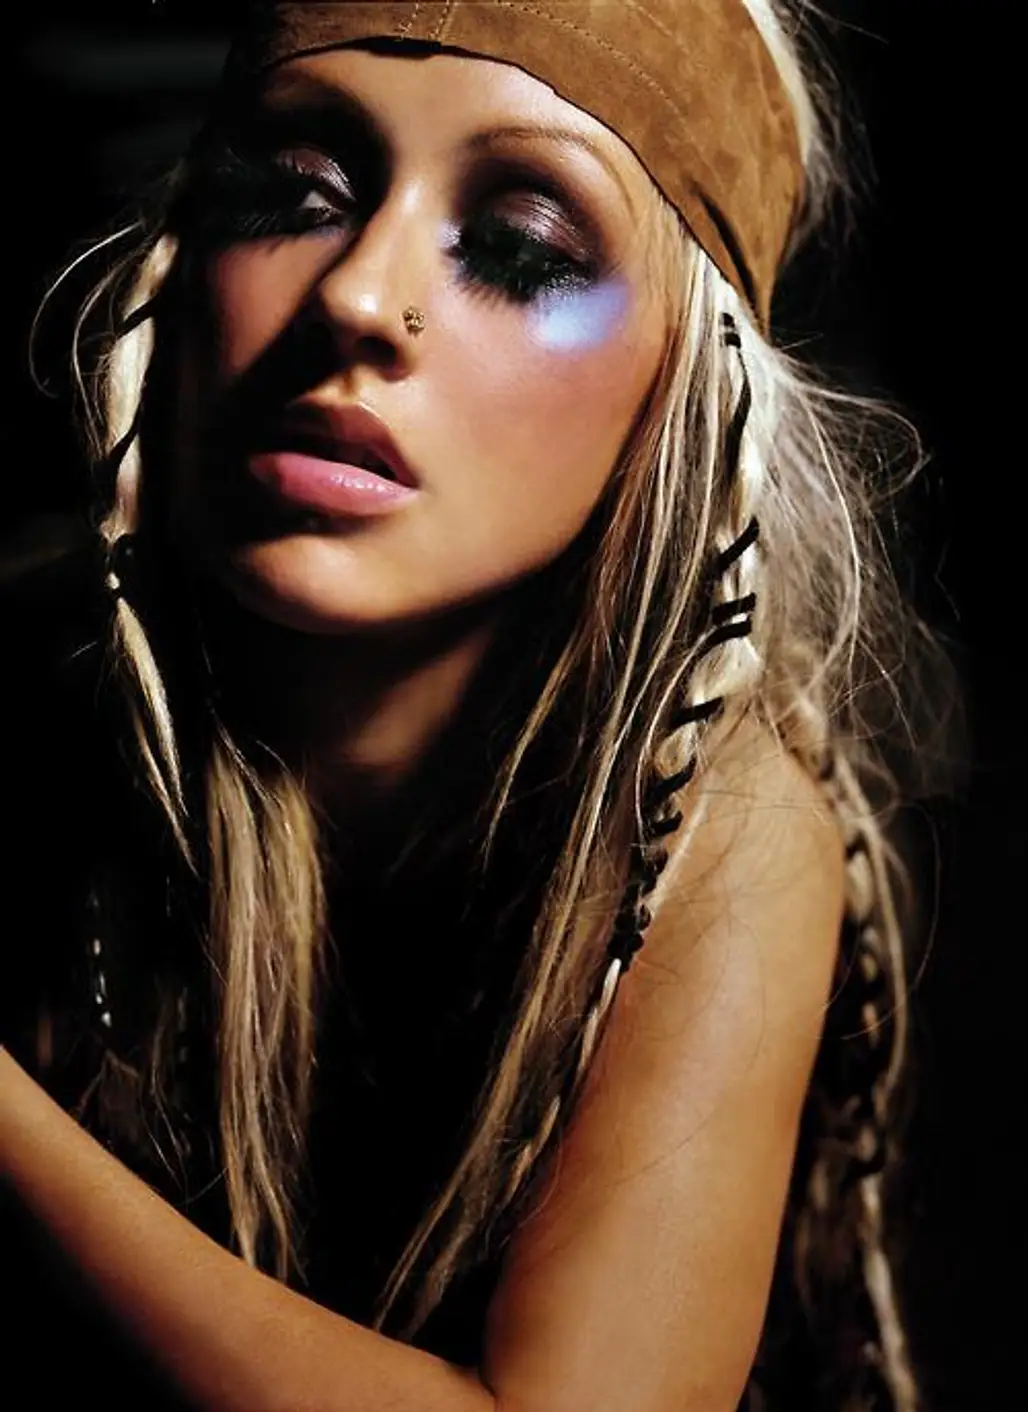 You Think Christina Aguilera’s Makeup is Natural